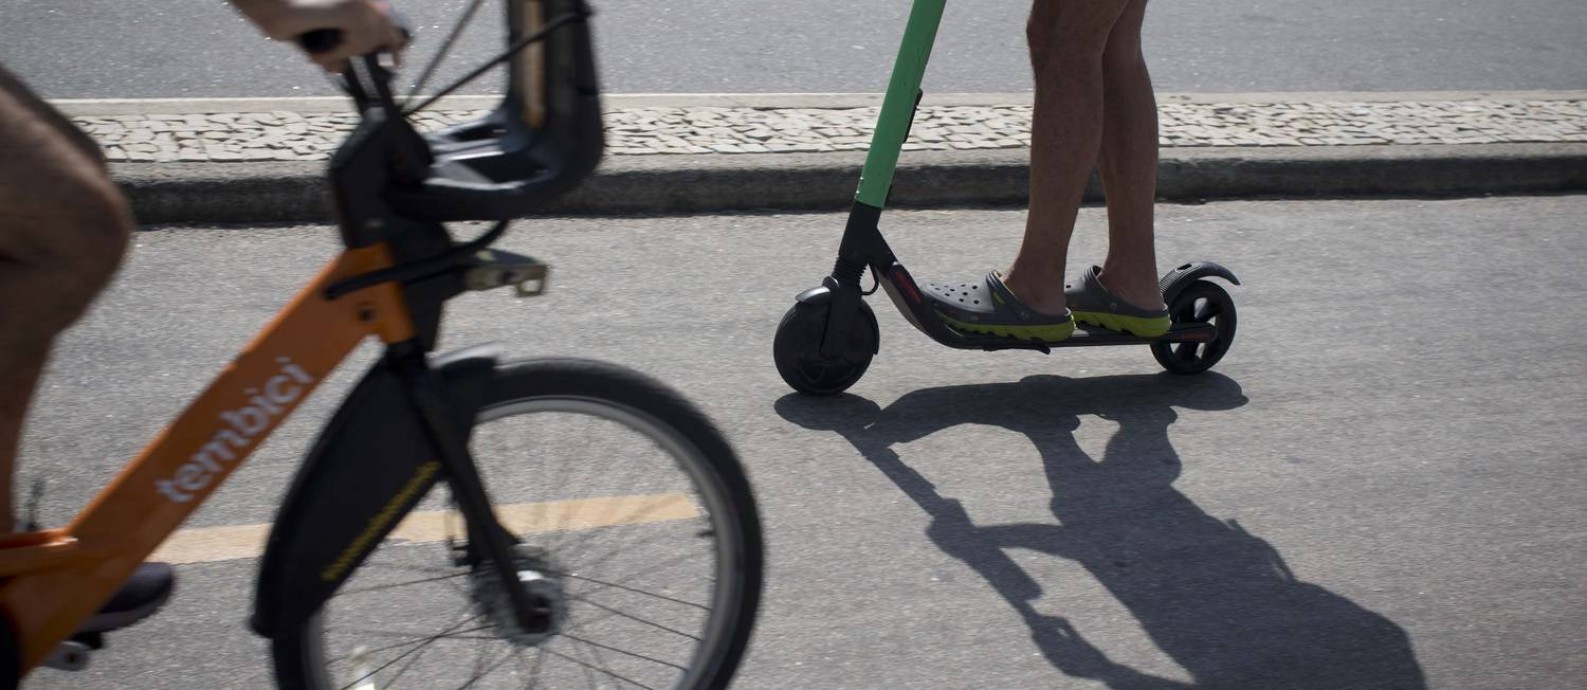 Patinetes e bicicletas na ciclovia de Ipanema Foto: Márcia Foletto / Agência O Globo